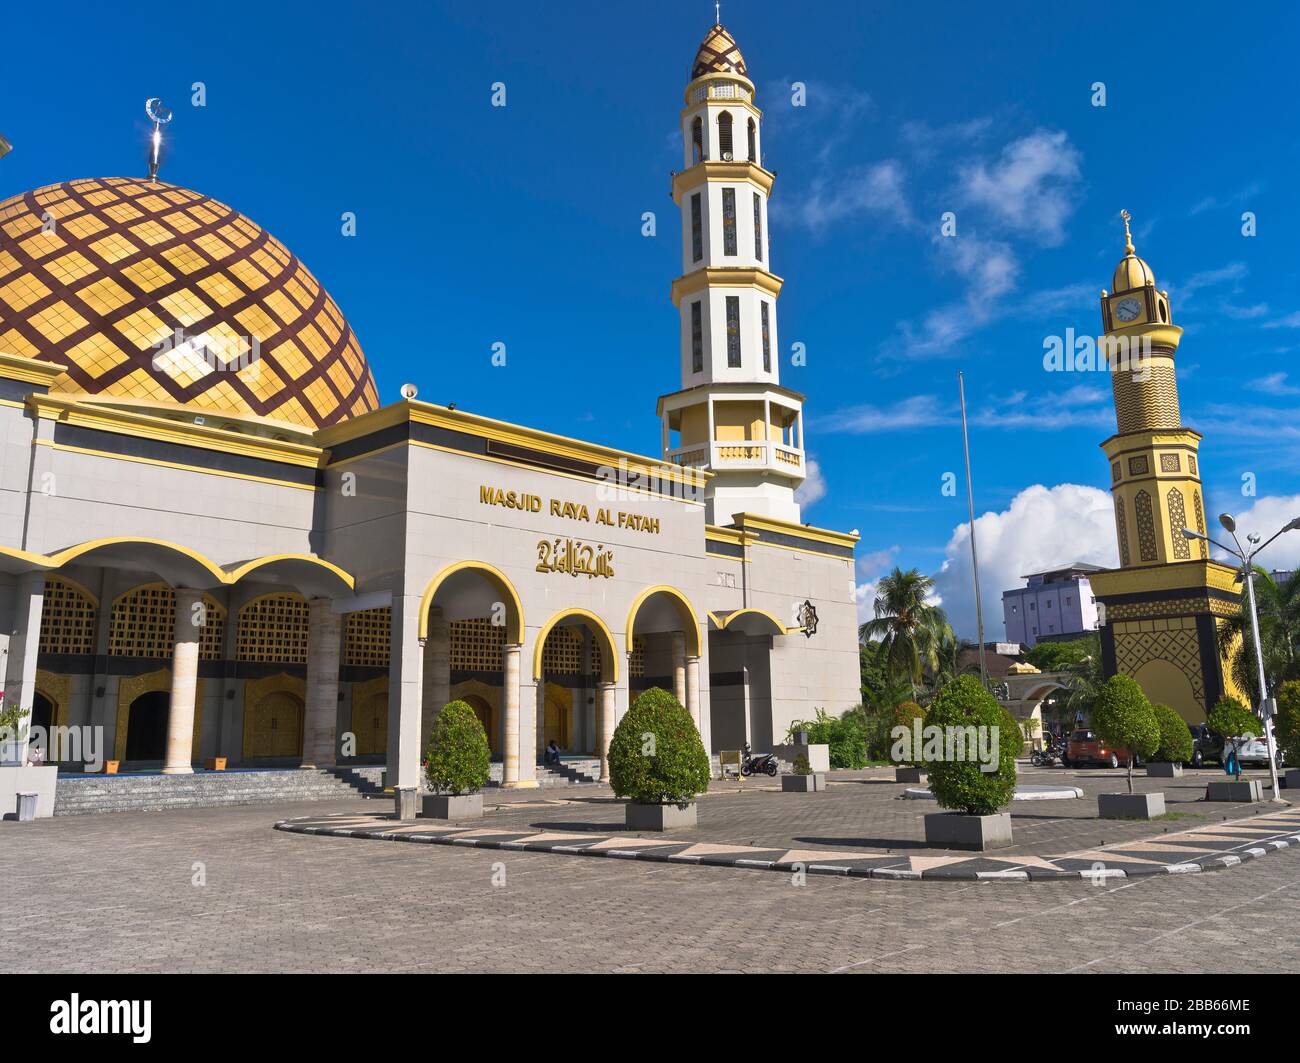 dh Masjid Raya al Fatah AMBON MALUKU INDONESIA Grand Moschee Dome Minarett Turm indonesische Architektur Gebet Türme islam Gebäude Stockfoto